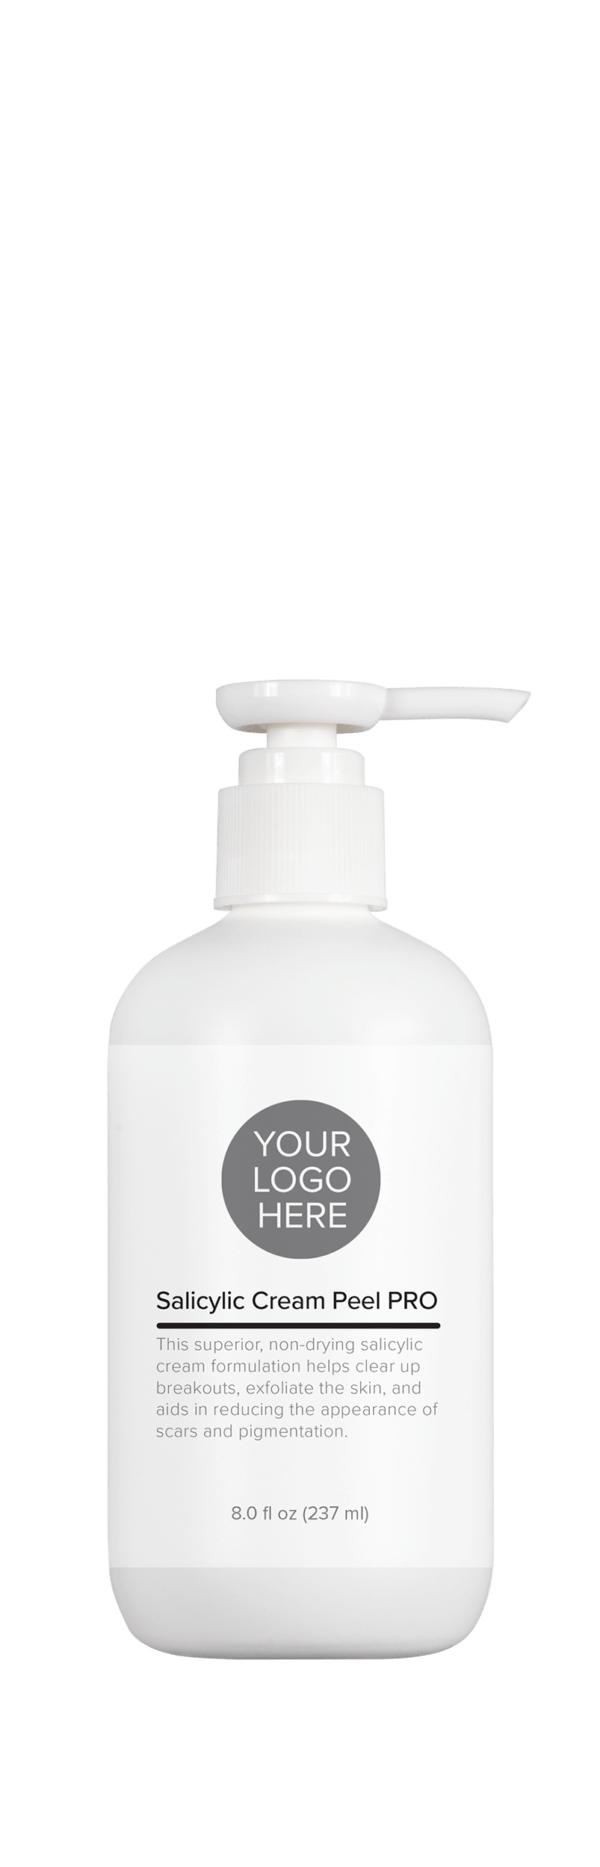 Salicylic Cream Peel PRO: 255BB803 8.0 fl oz Pump bottle